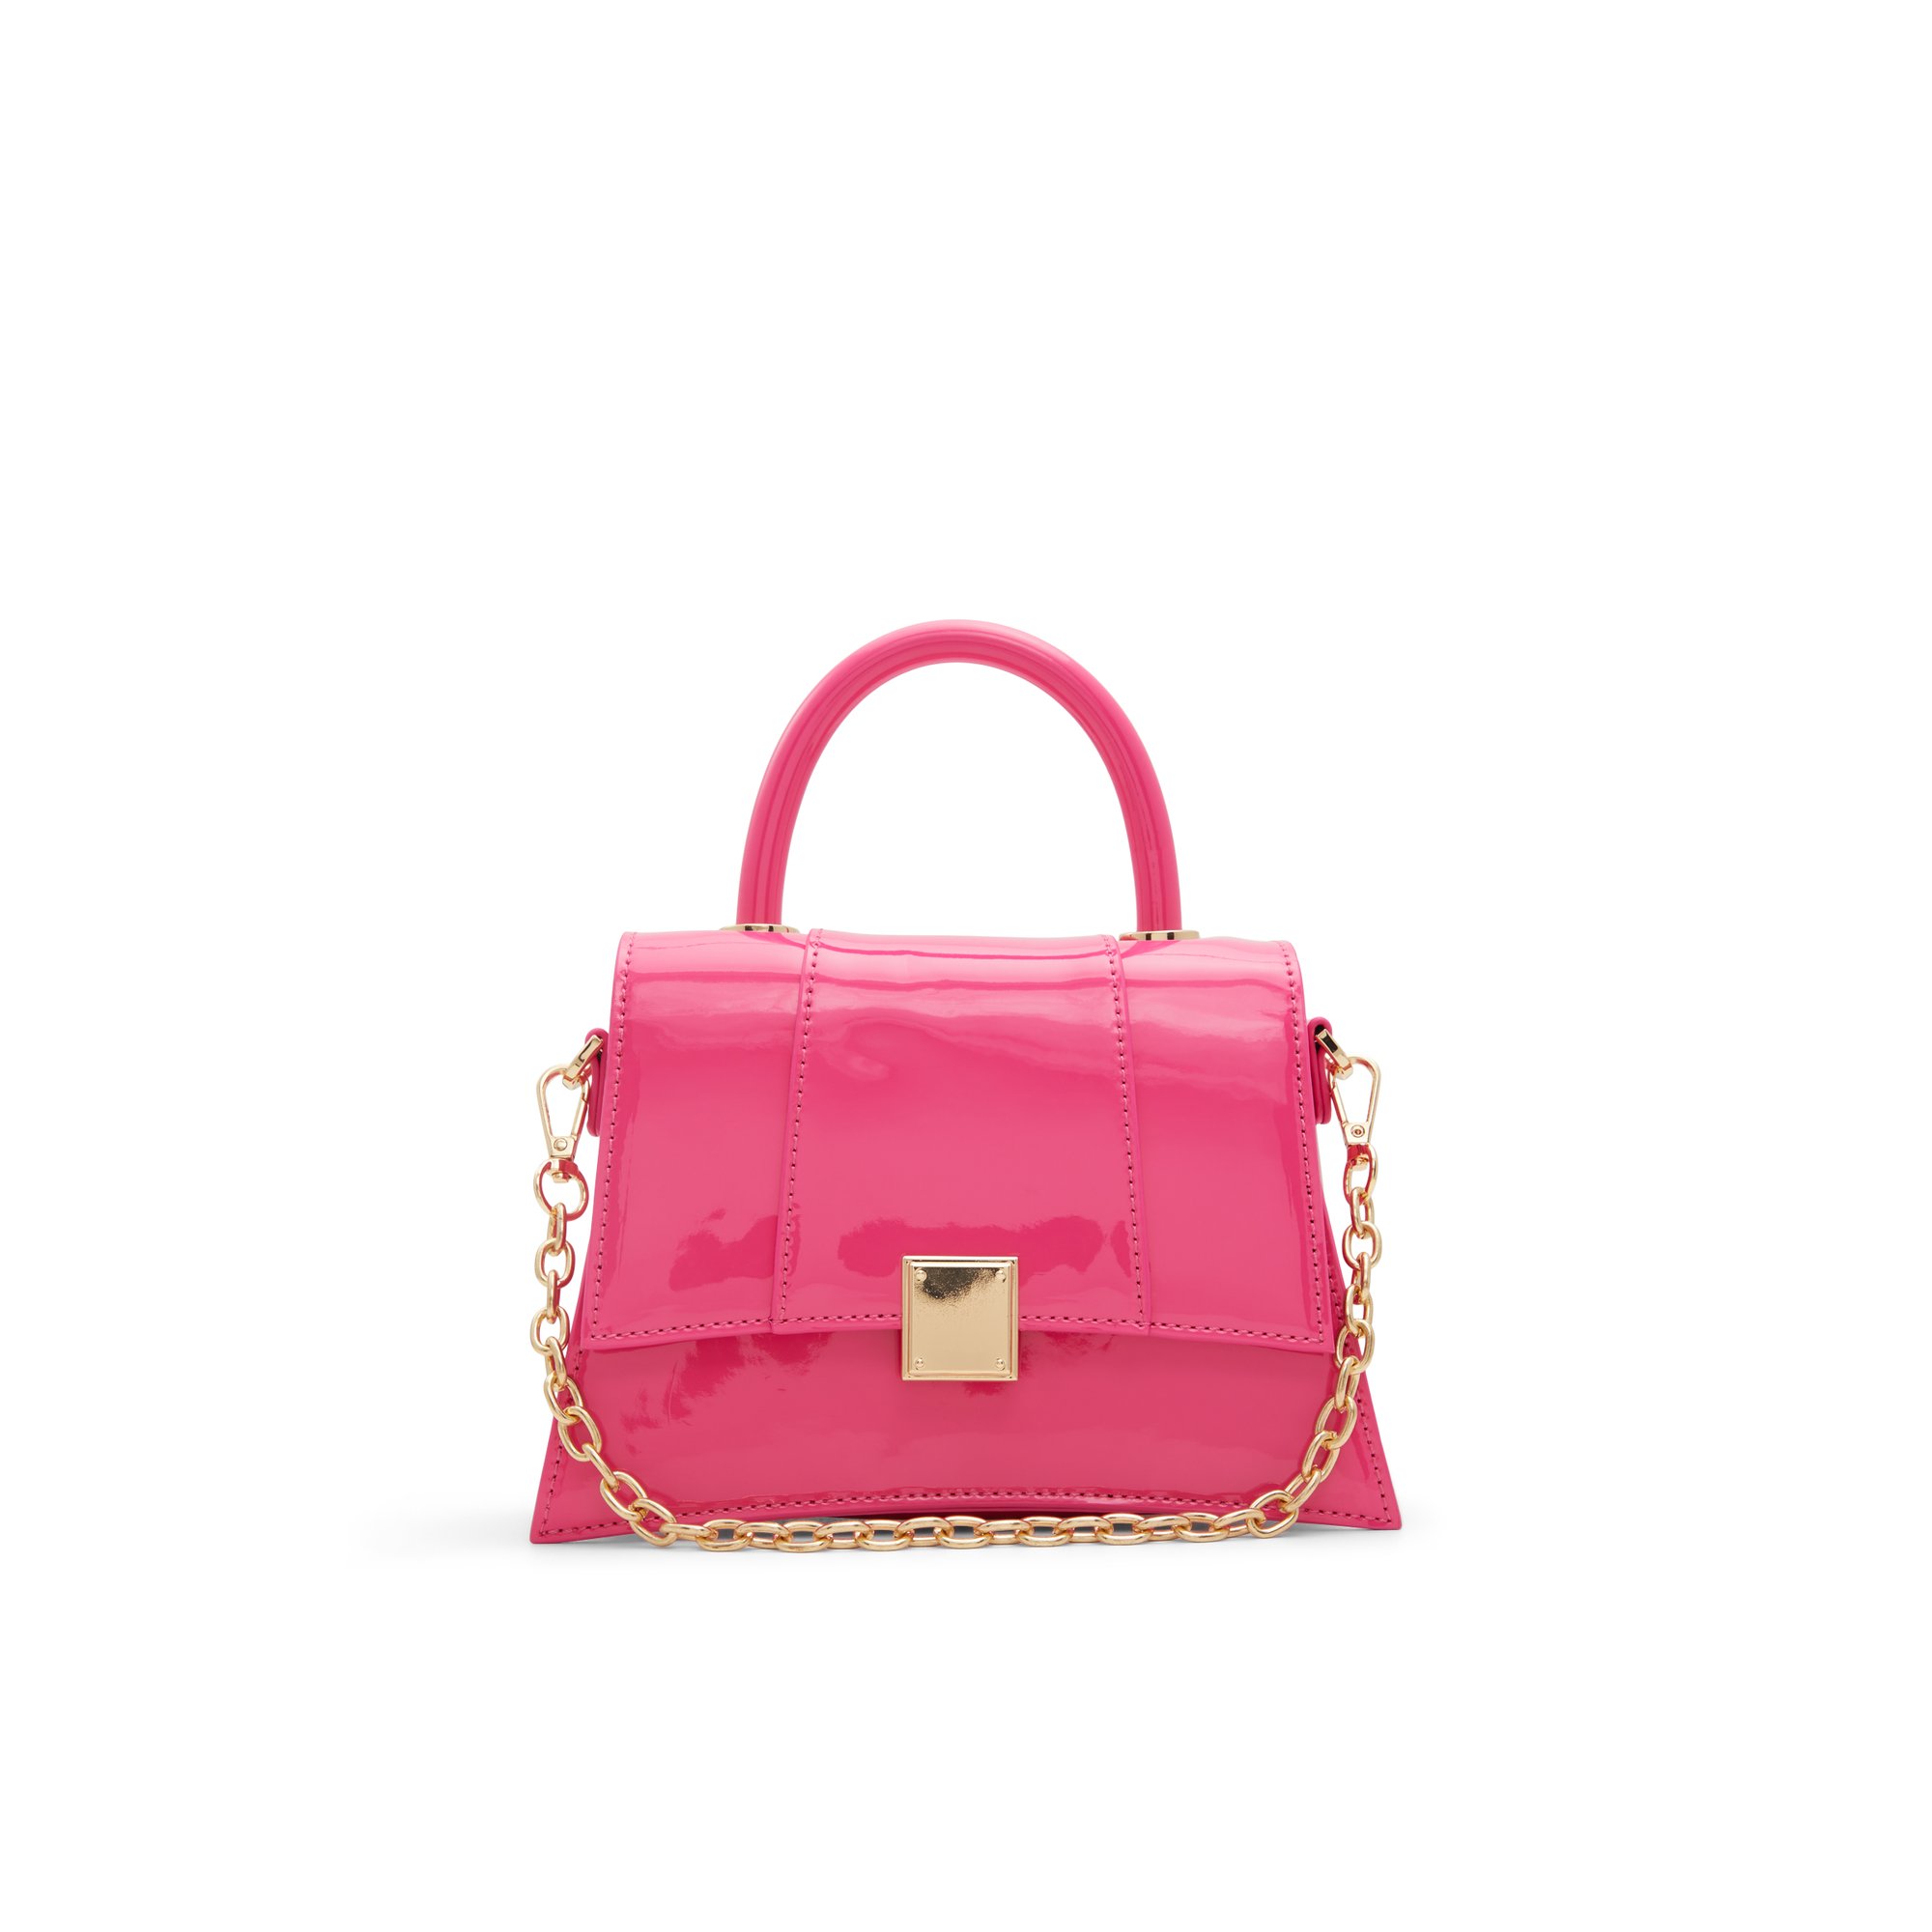 ALDO Kindraax - Women's Top Handle Handbag - Pink